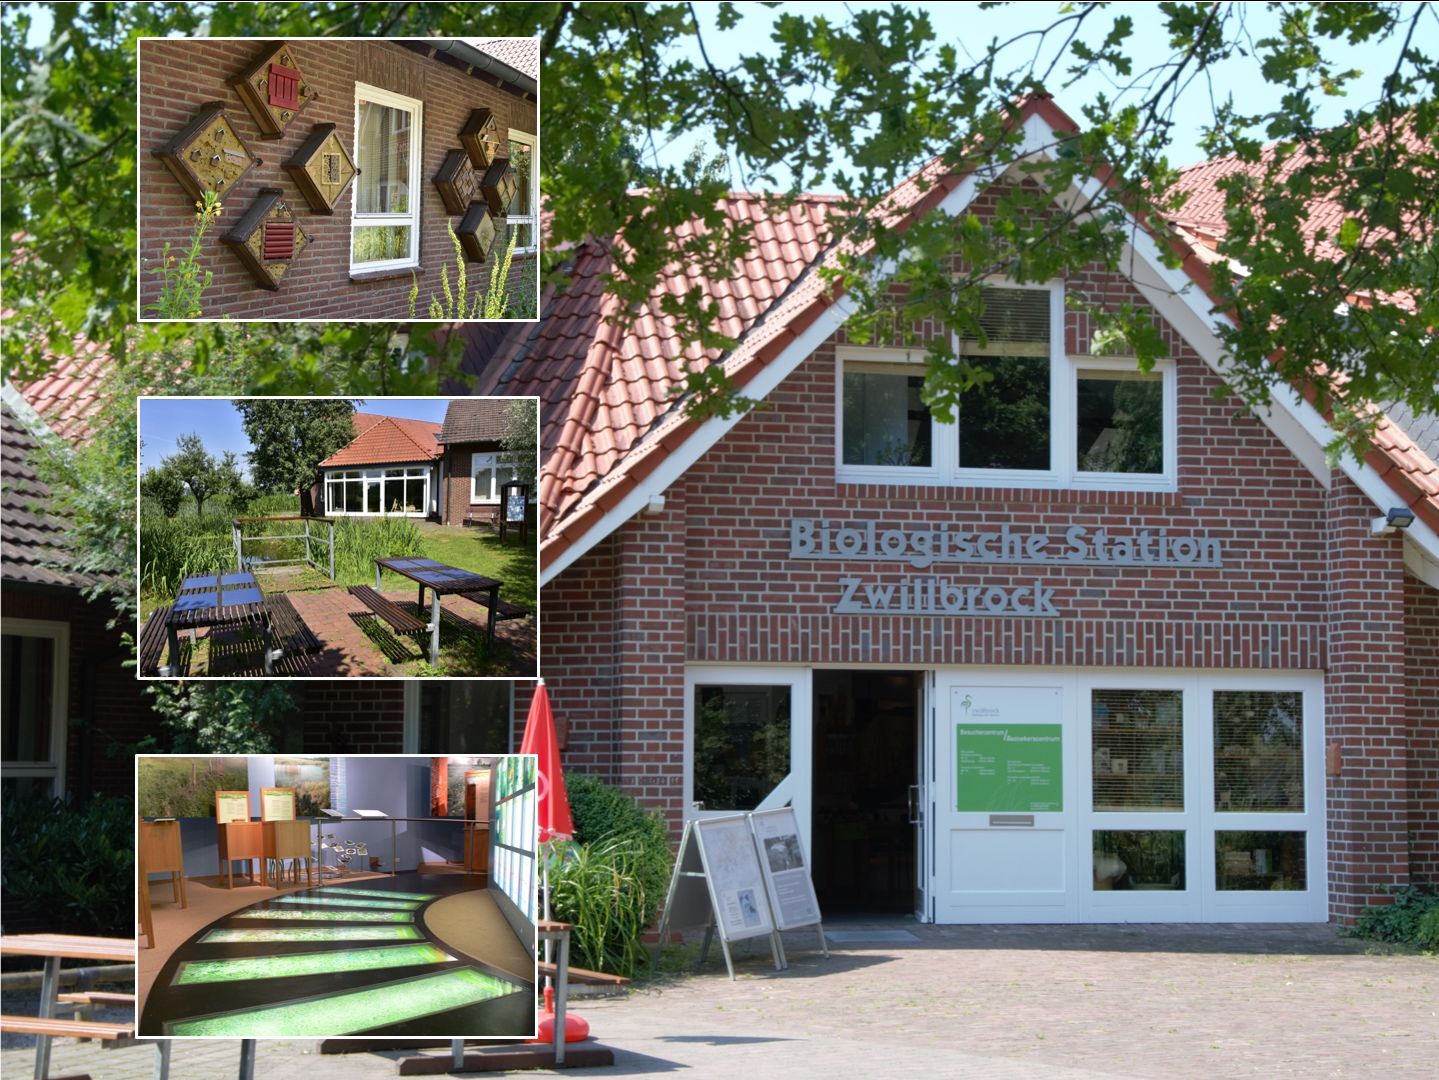 Besucherzentrum Biologische Station Zwillbrock